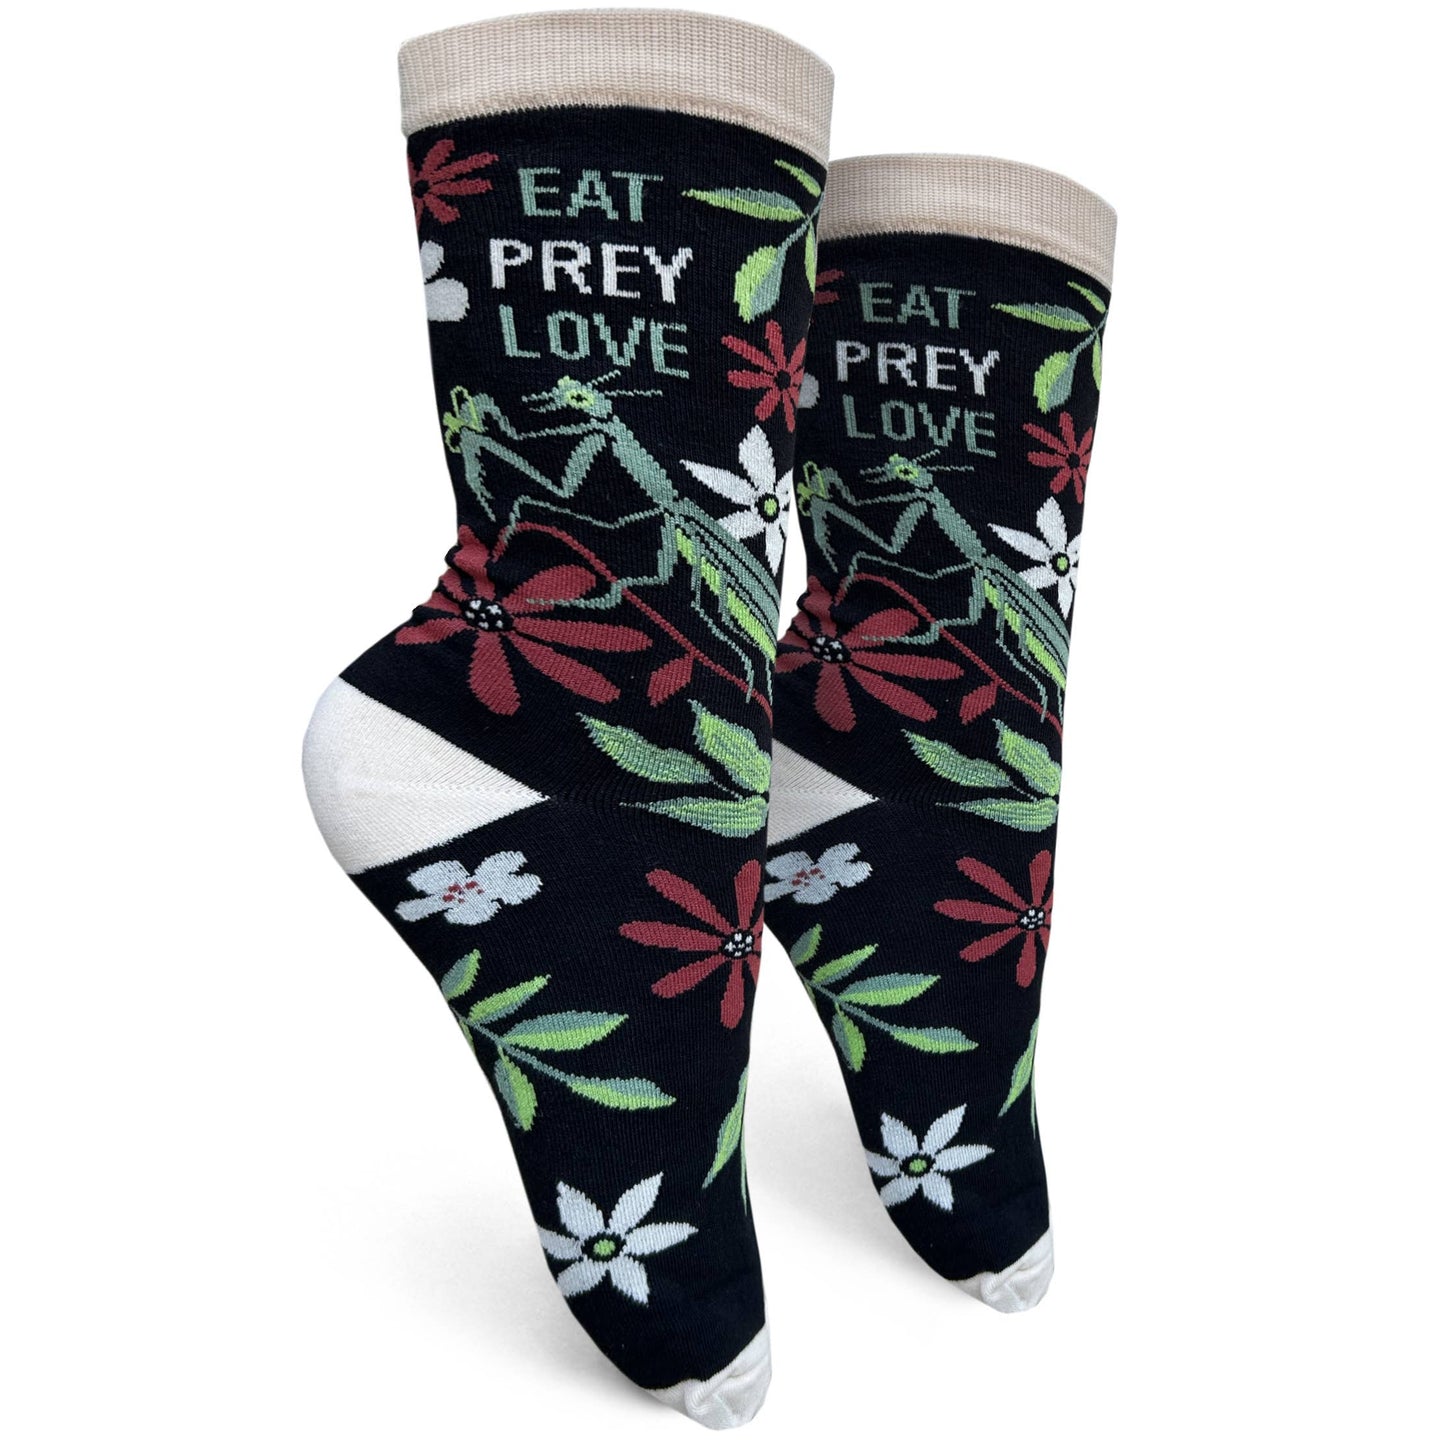 Eat Prey Love Womens Crew Socks